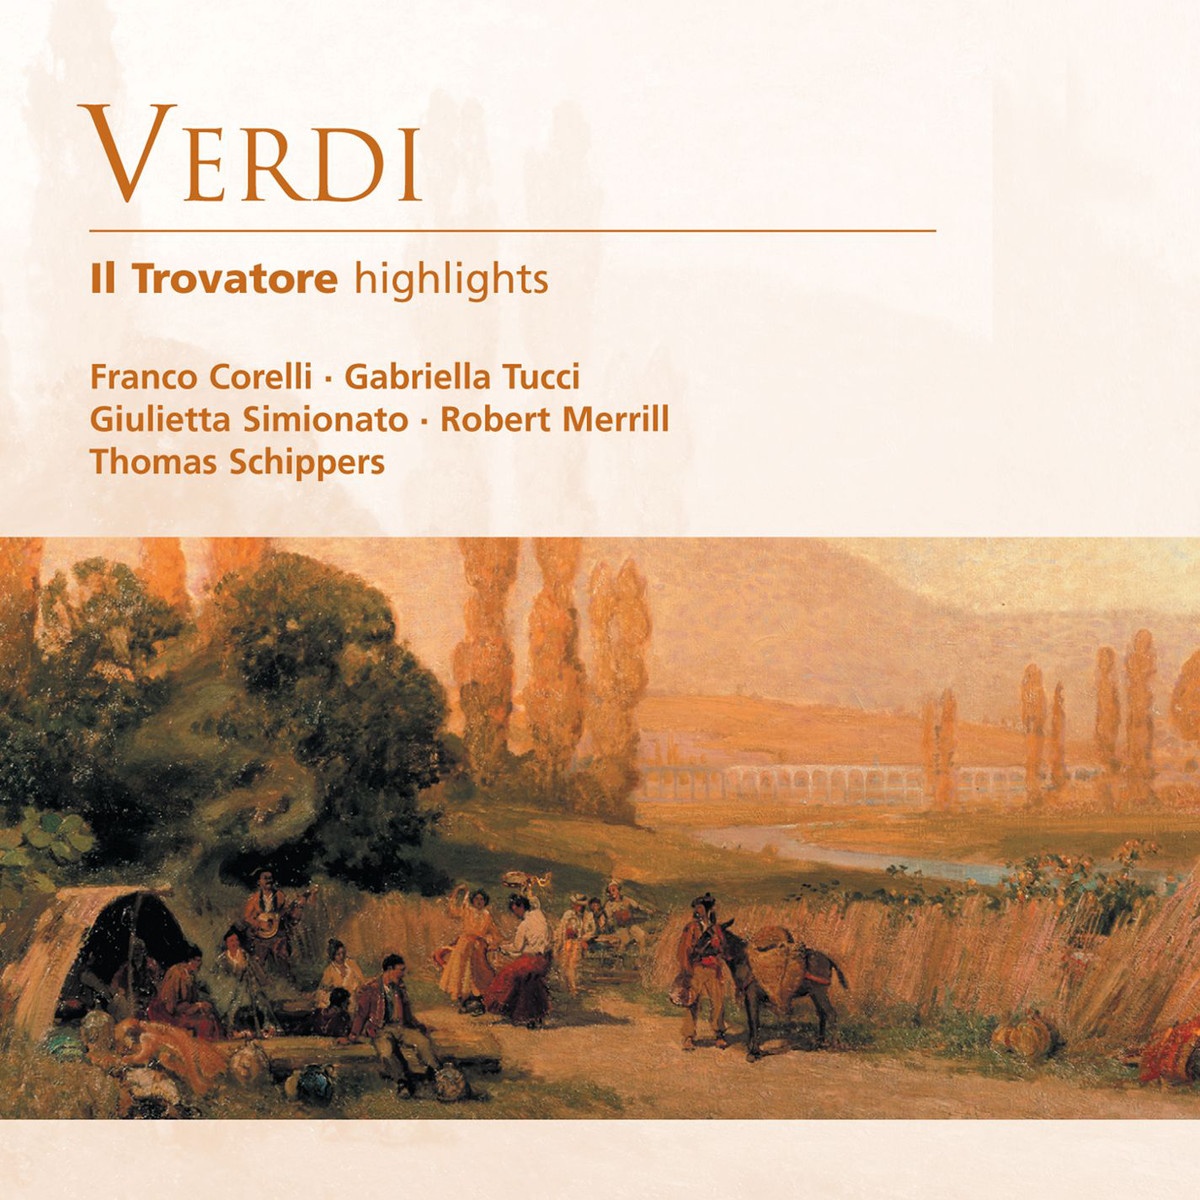 Il Trovatore (highlights): Vedi! le fosche notturne spoglie (Anvil Chorus)